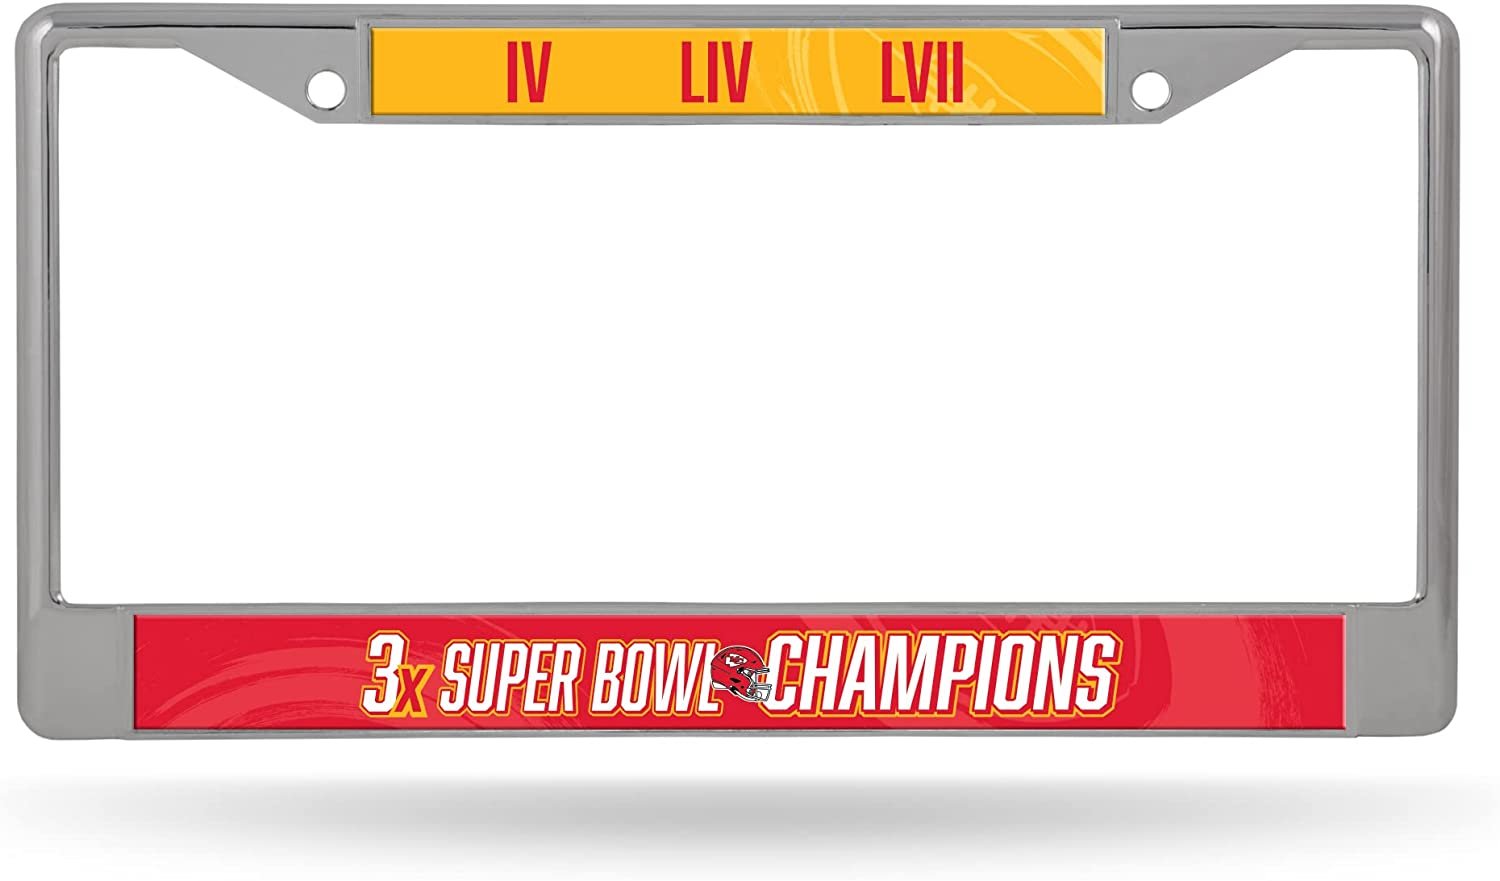 Kansas City Chiefs 3 Time Super Bowl Champions Metal License Plate Frame Chrome Tag Cover